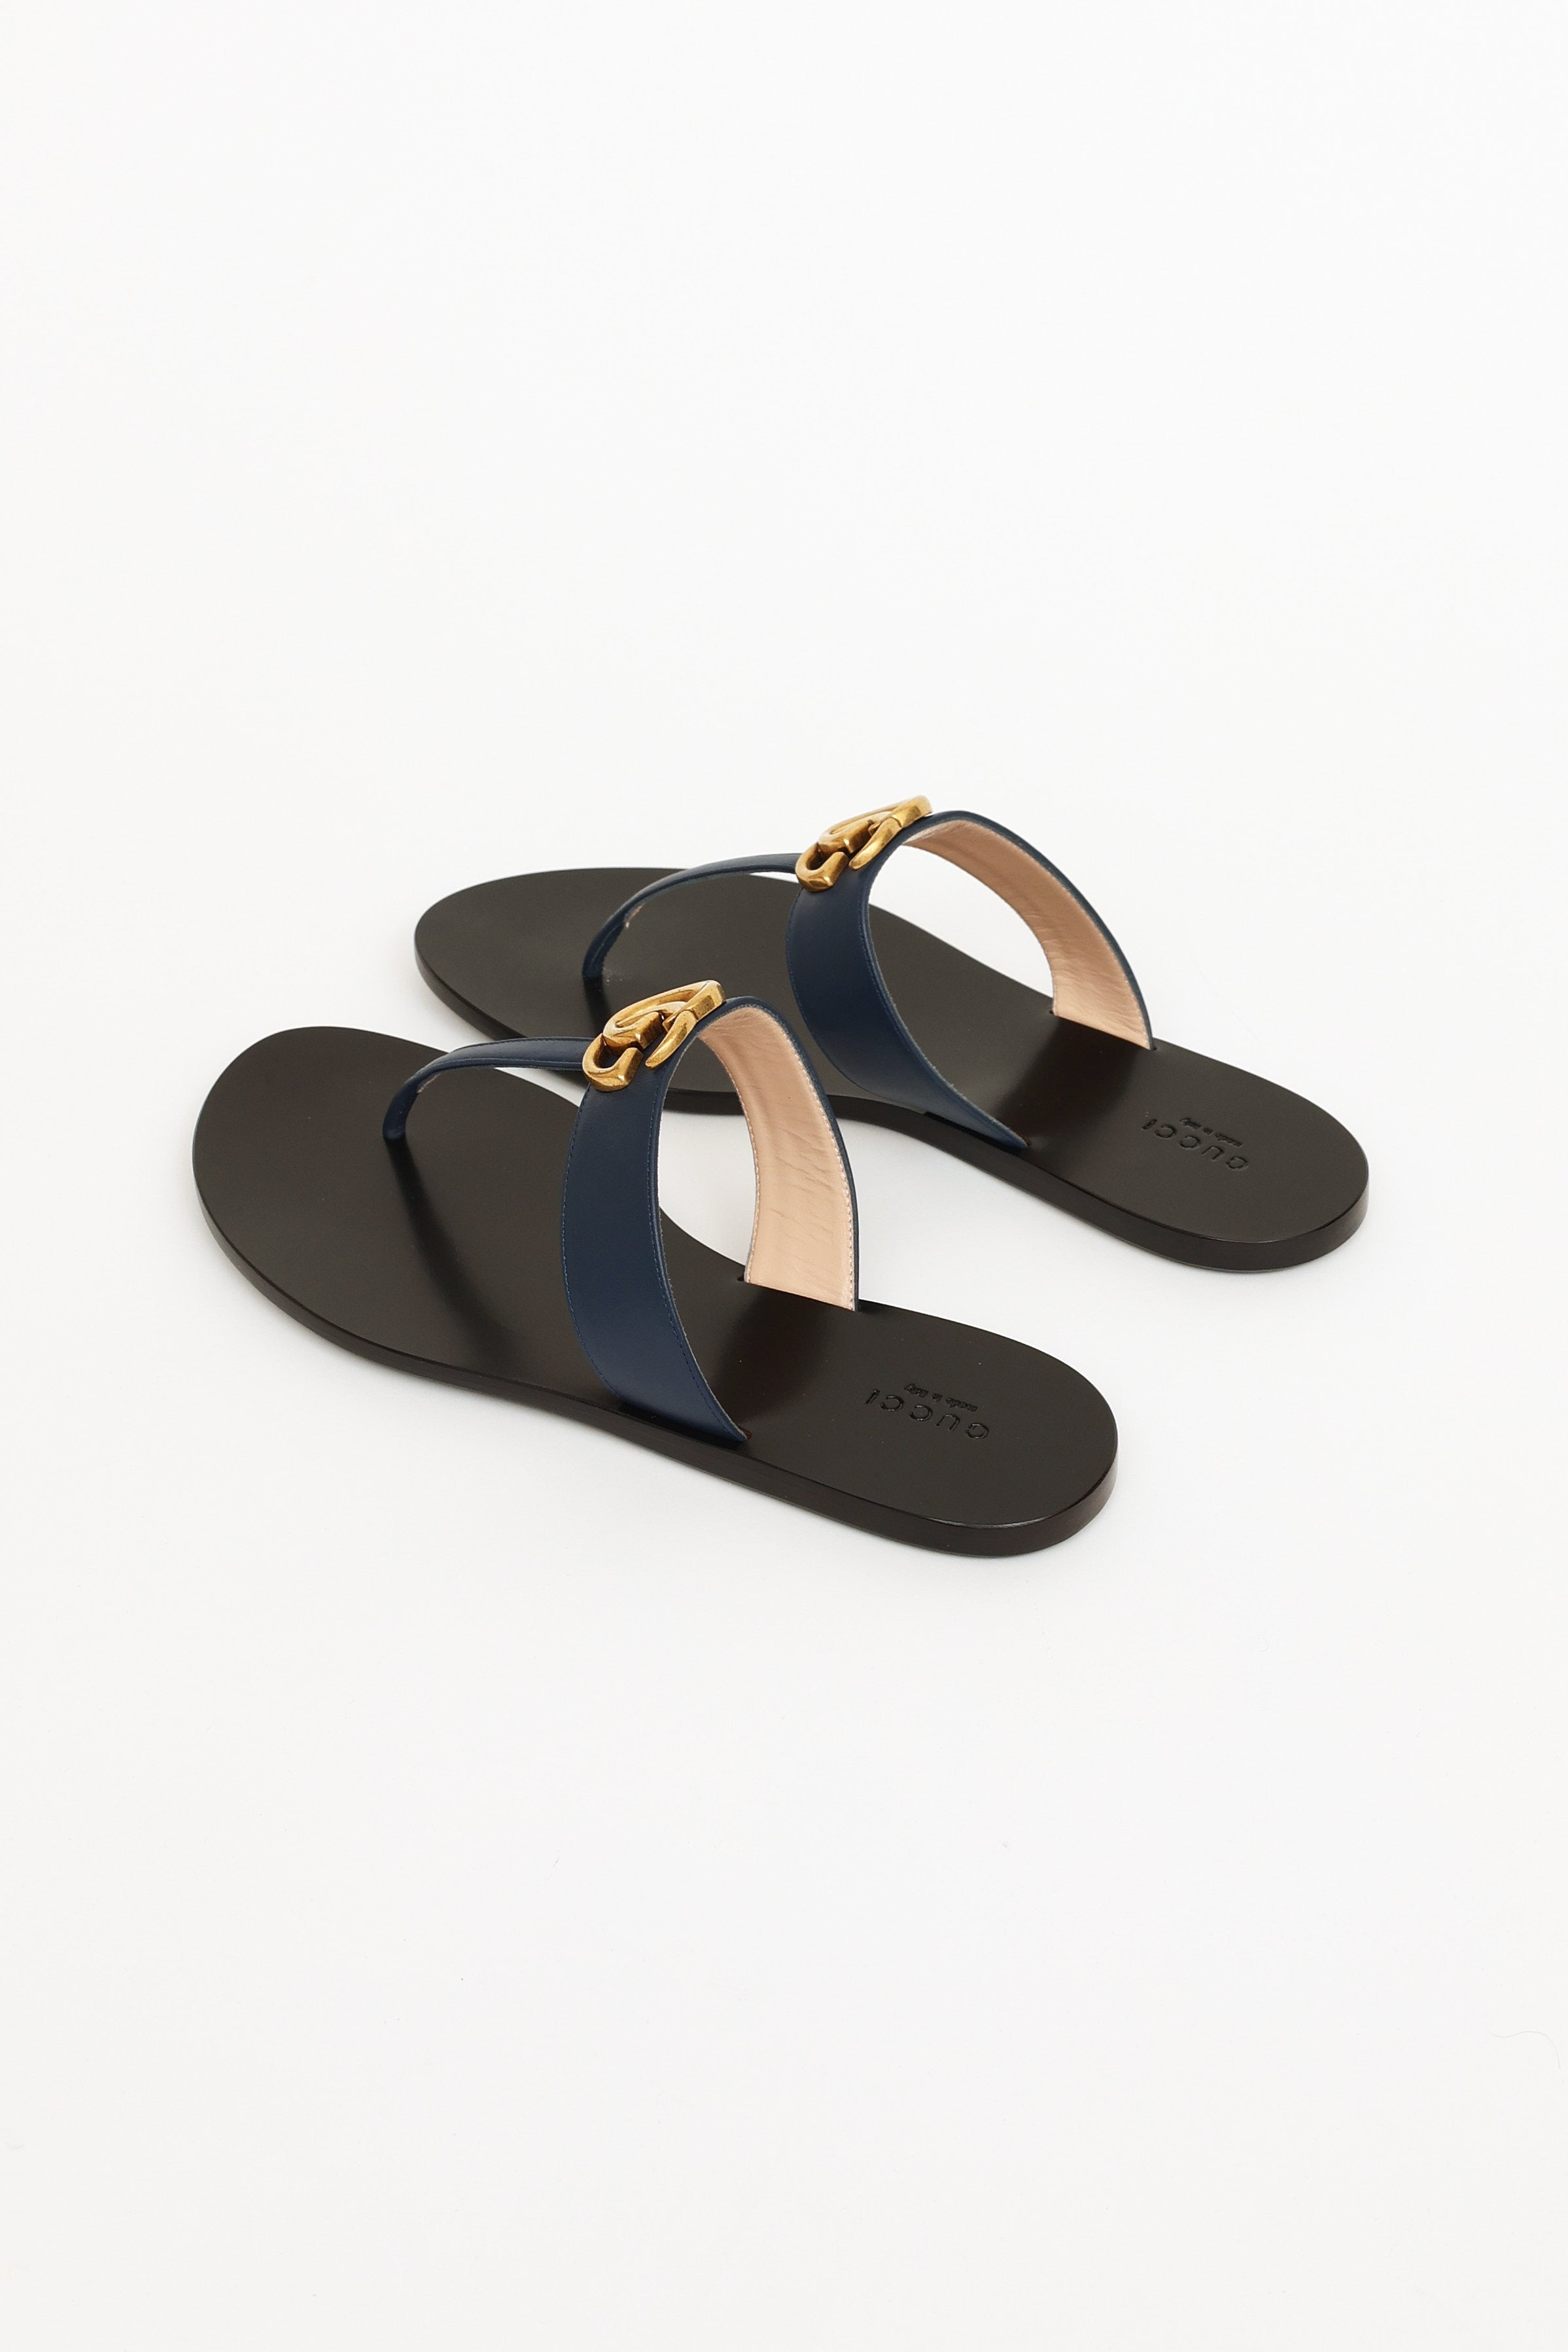 Gucci Blondie Medallion Thong Sandals - Bergdorf Goodman